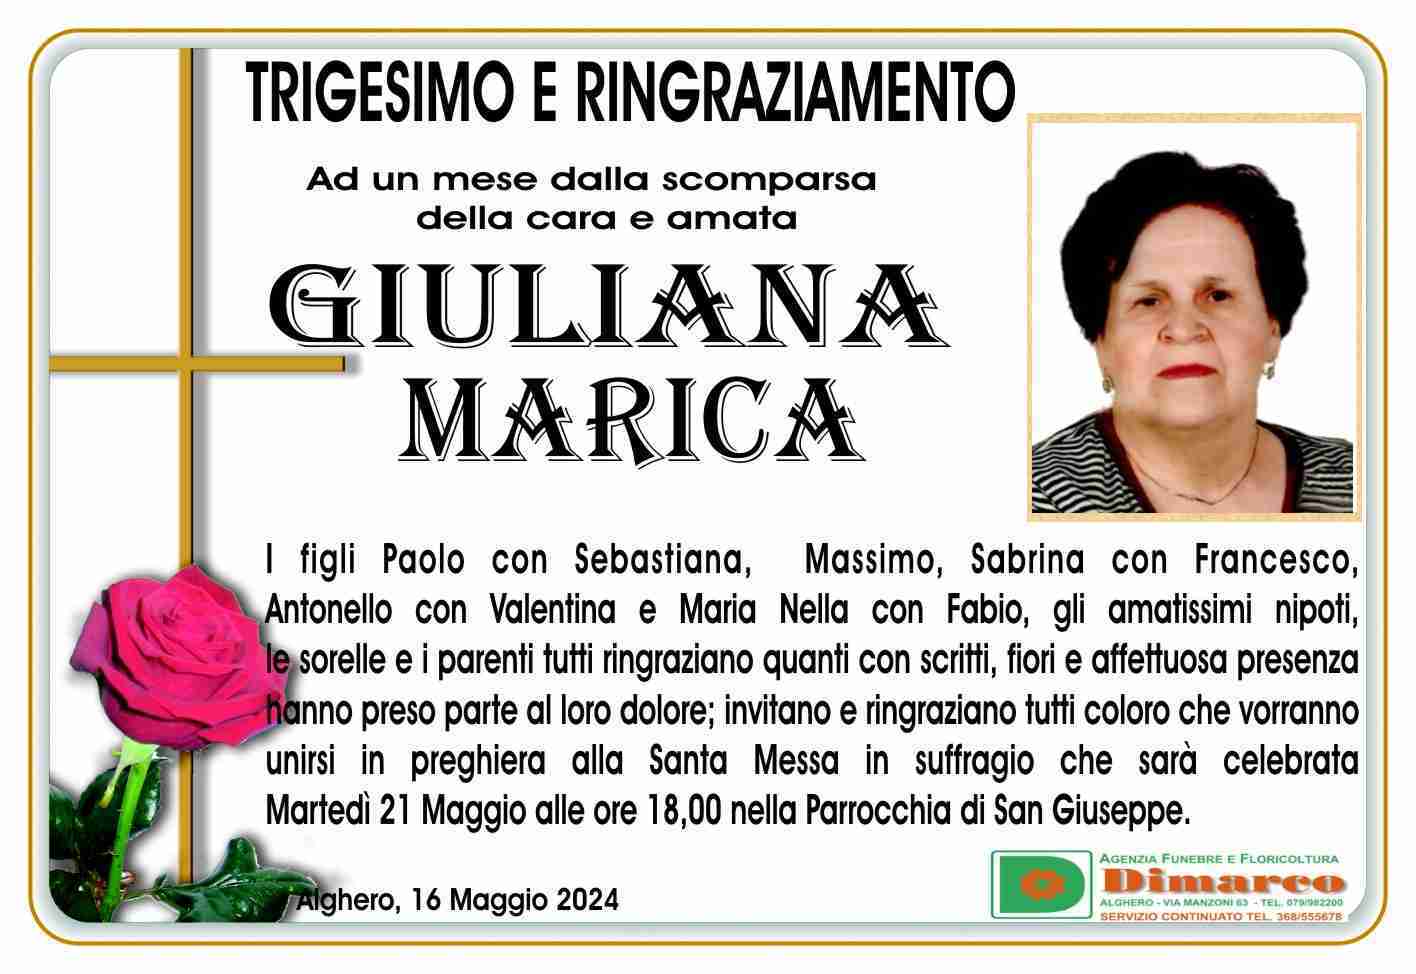 Giuliana Marica